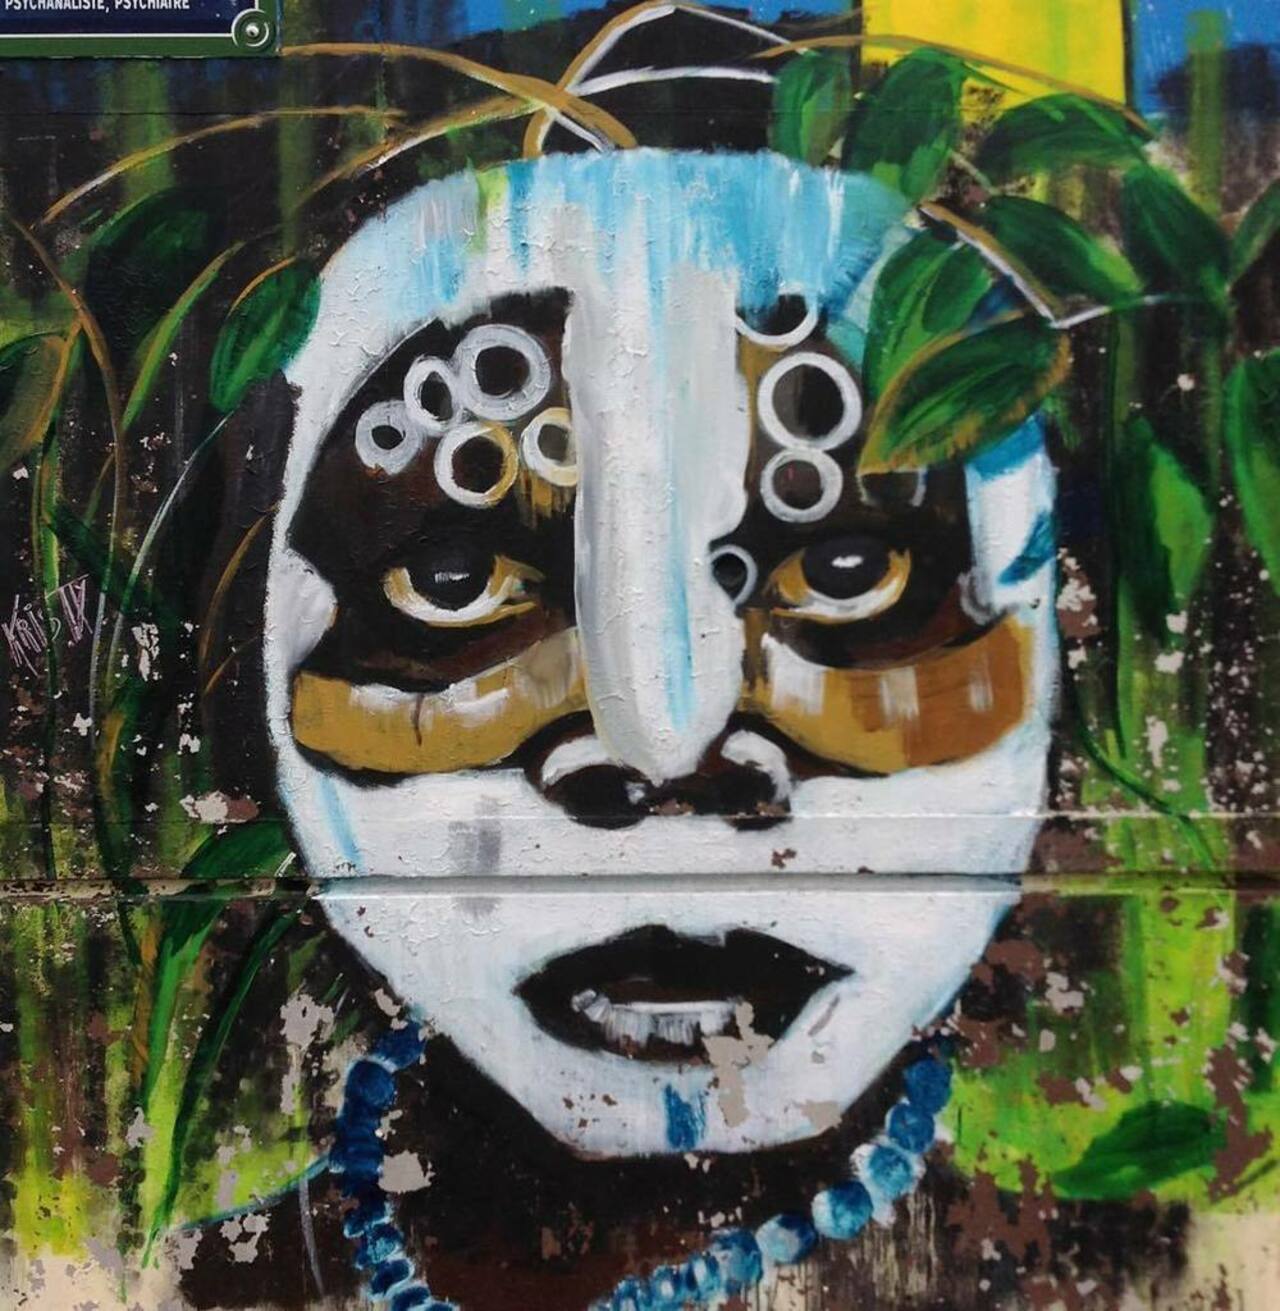 Guerrier #street #streetart #streetartparis #graff #graffiti #urban #urbain #urbanart #urbainart #art #artist #artd… https://t.co/SuNY0f8DMG